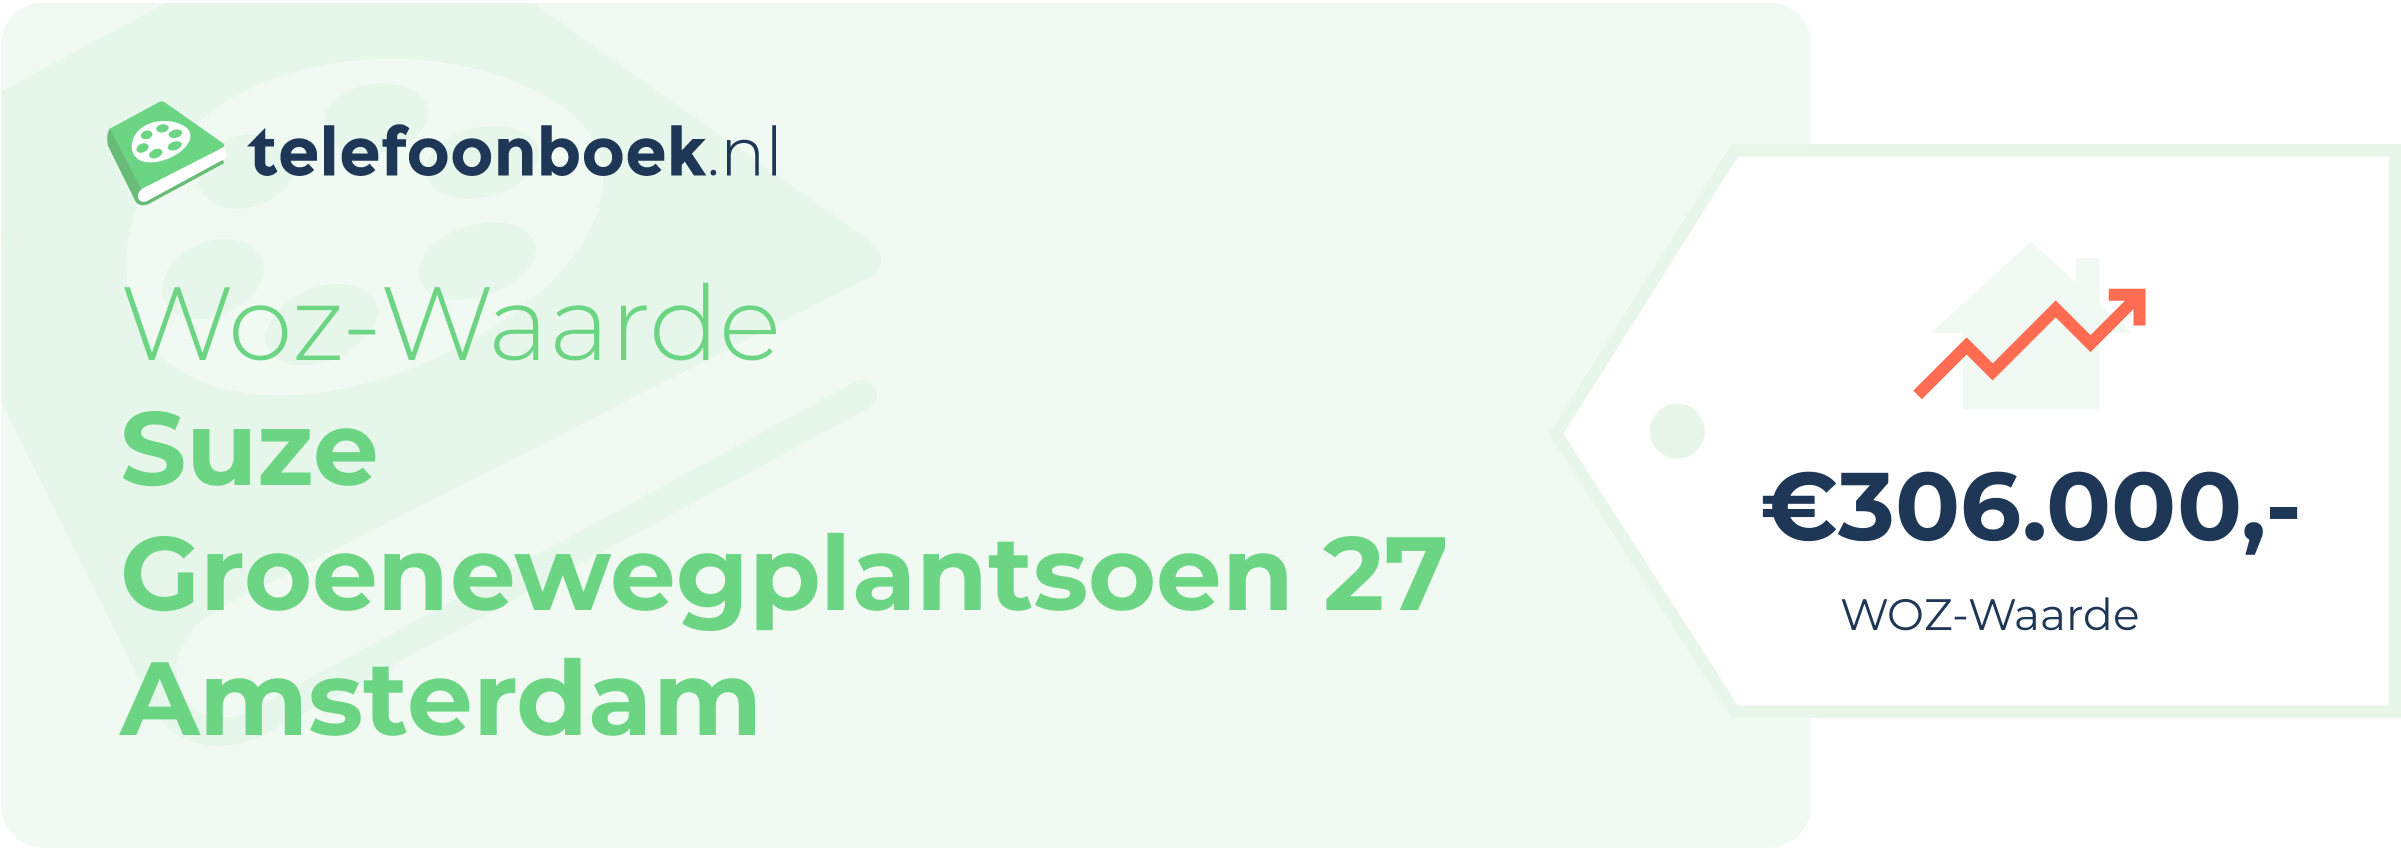 WOZ-waarde Suze Groenewegplantsoen 27 Amsterdam